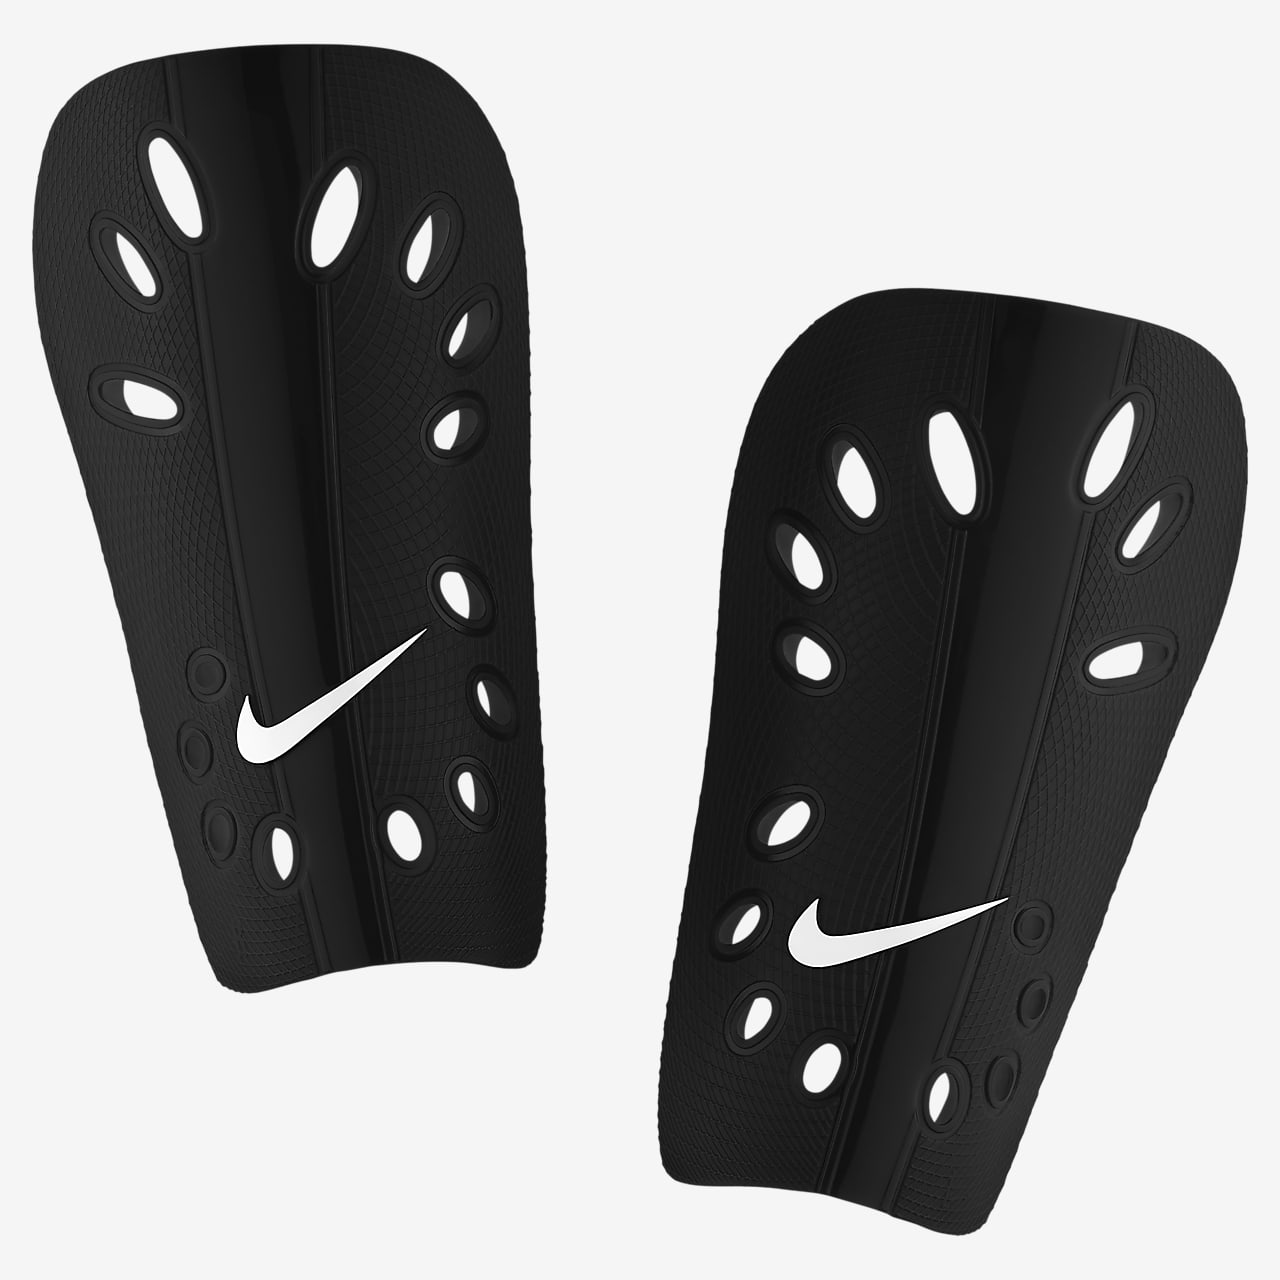 Espinilleras fútbol Nike Nike.com